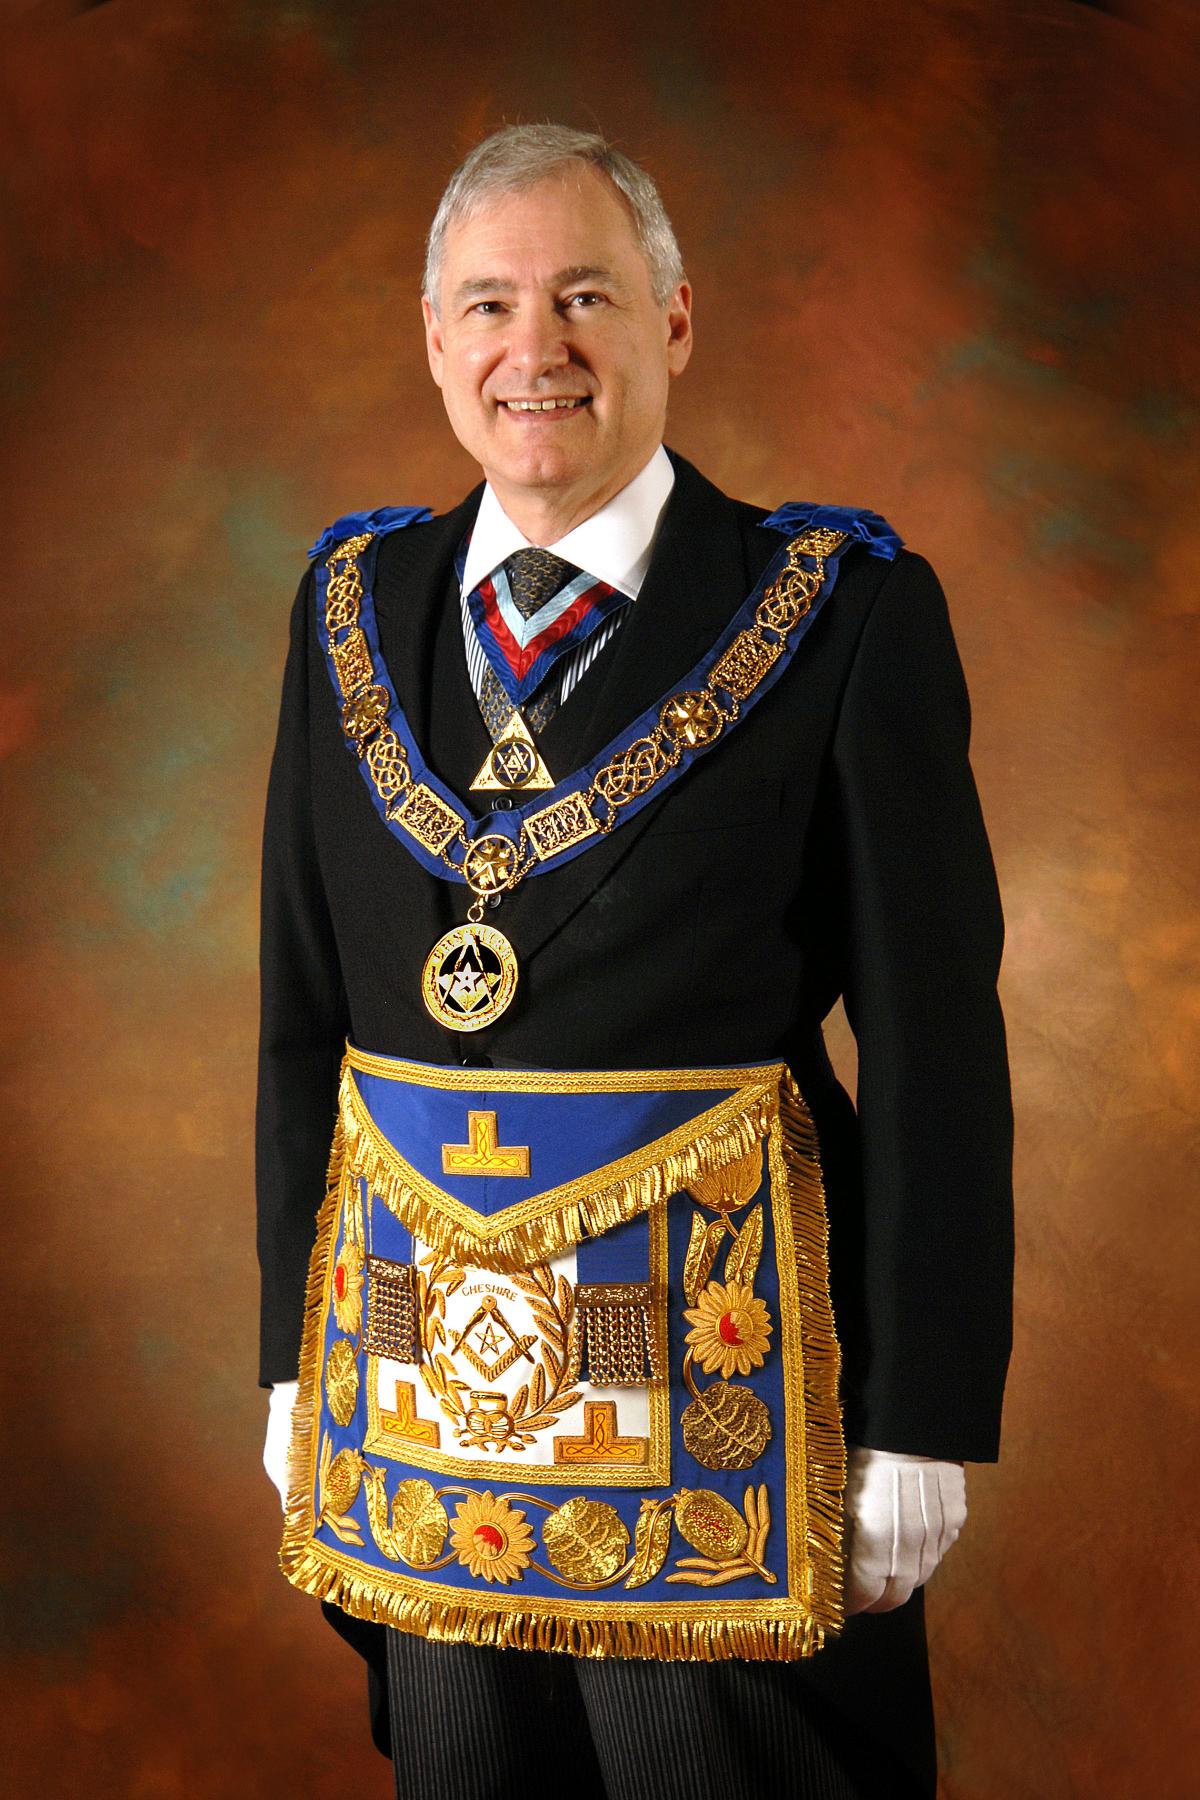 Leader of Cheshire Freemasons, Stephen Martin Blank (Gemma Sproston). 